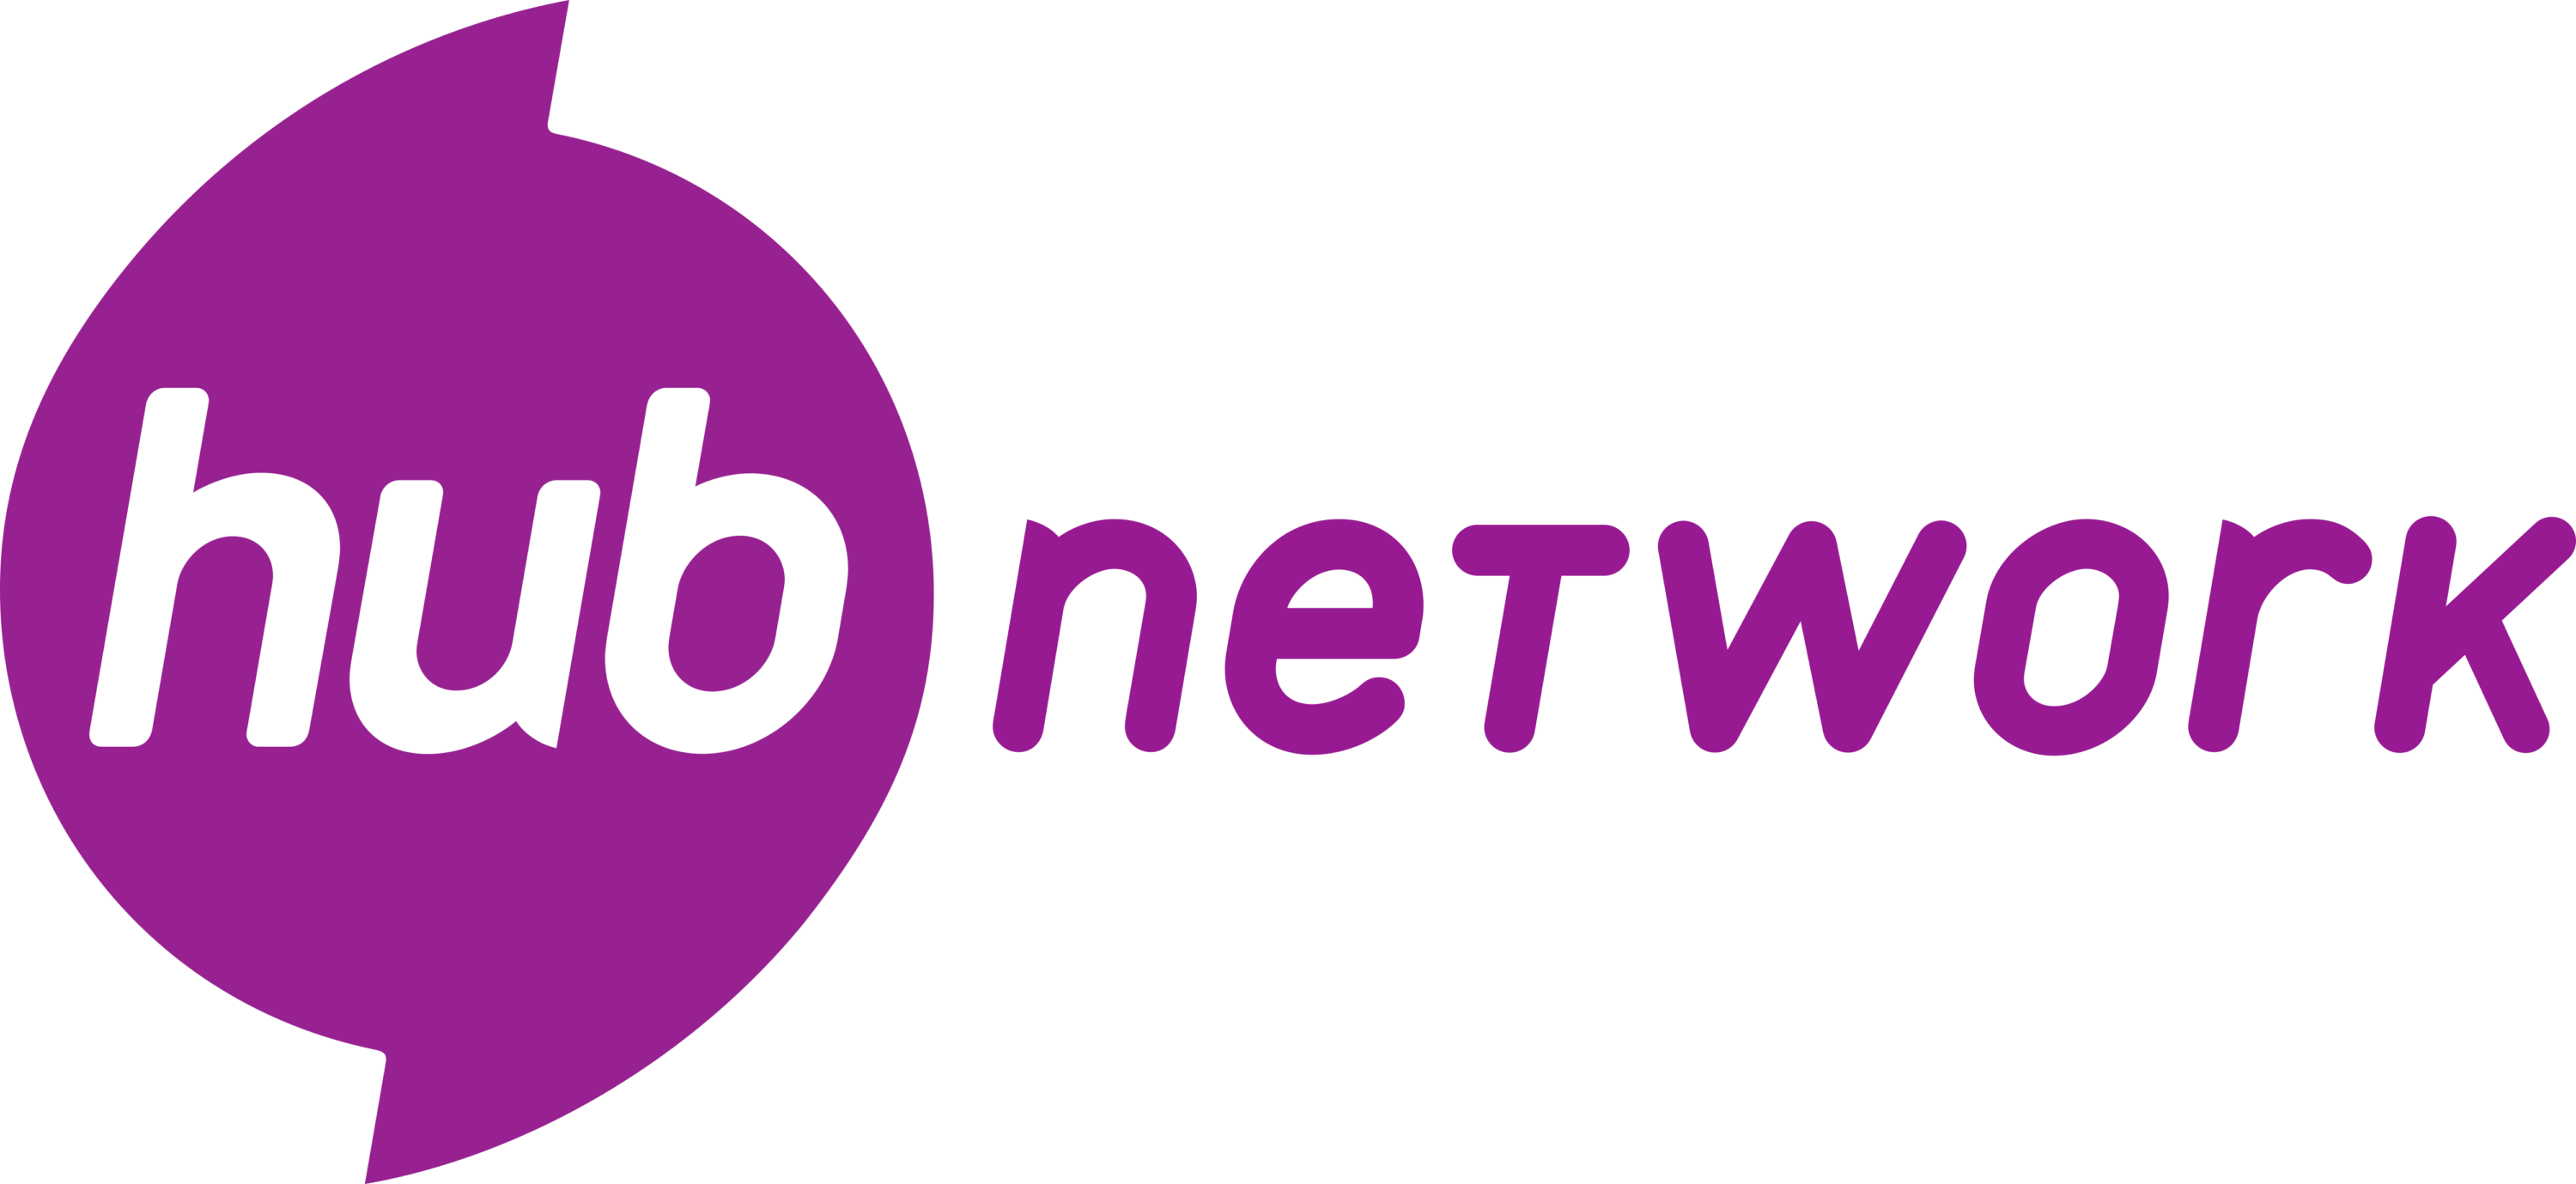 Hub Network Logo